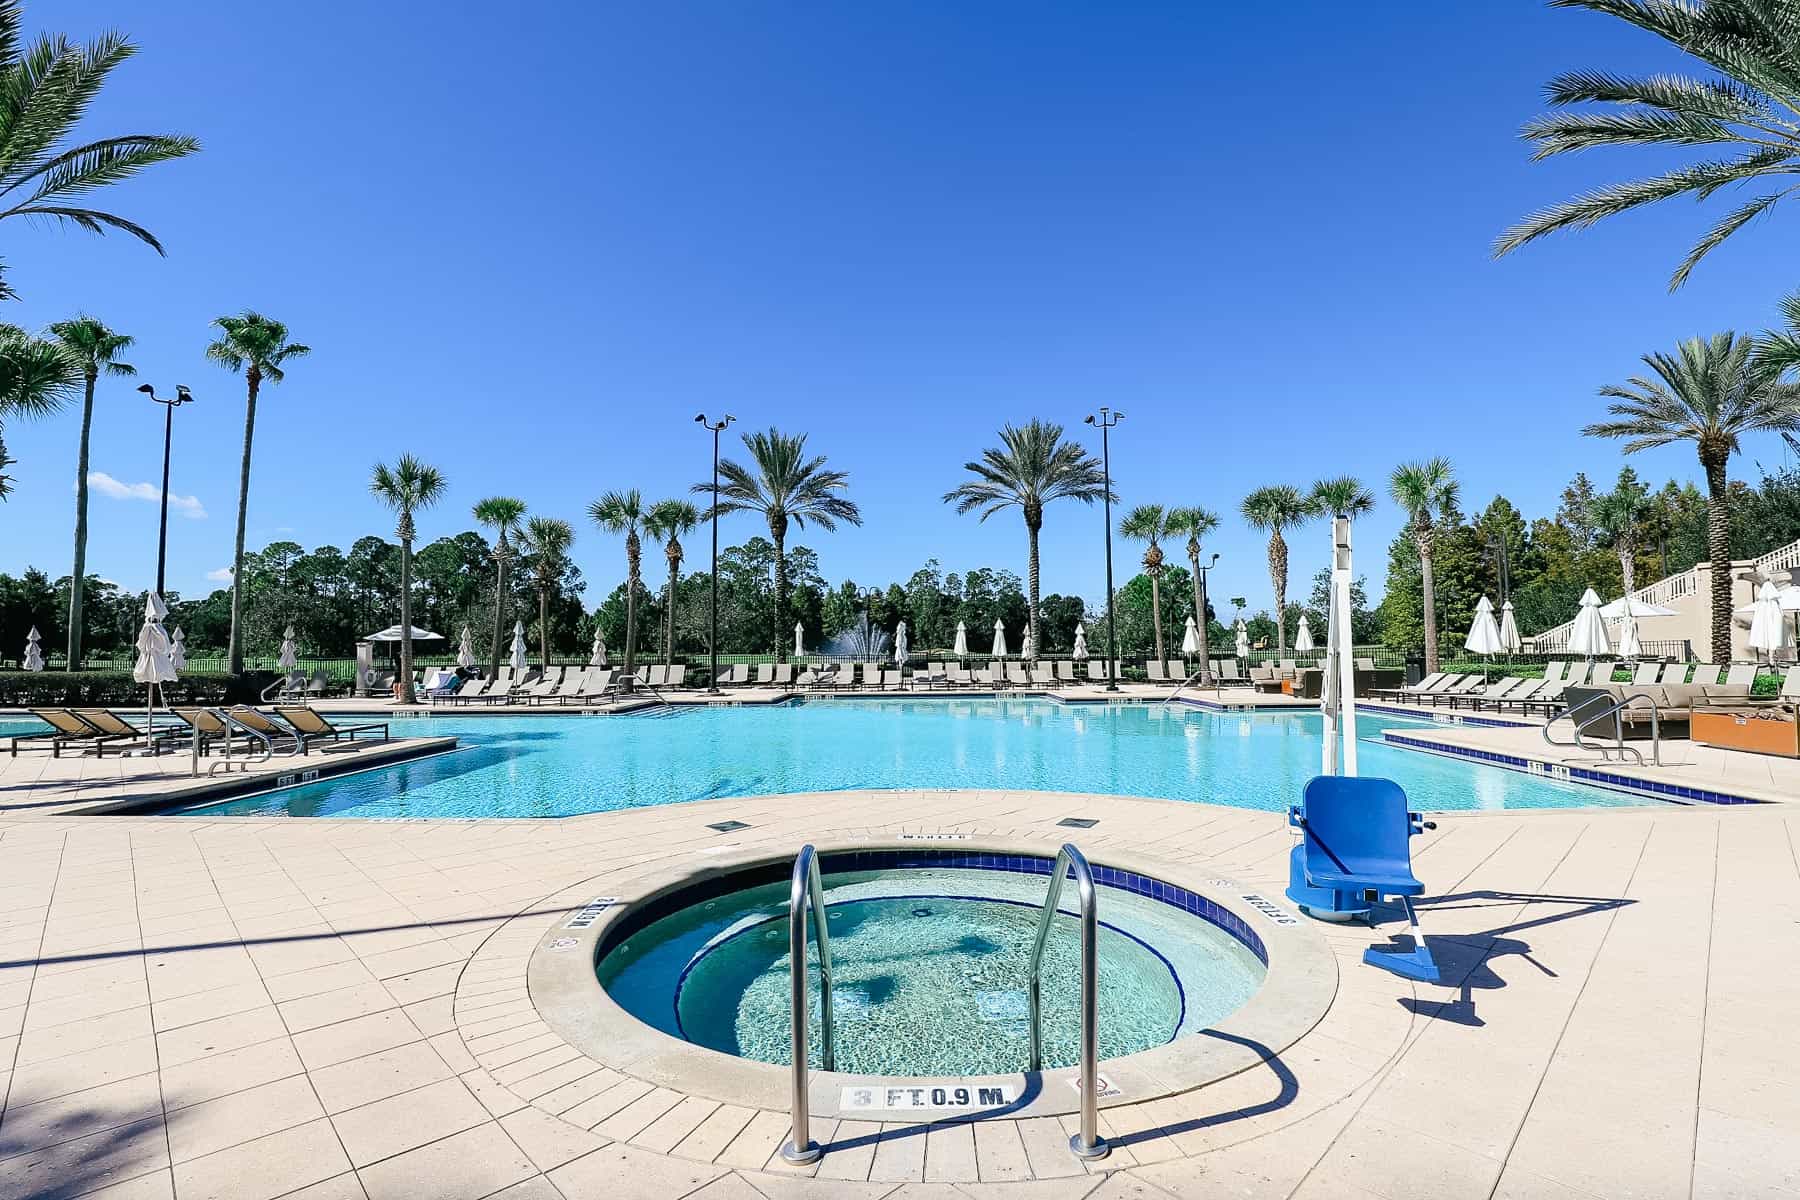 whirlpool spa and pool amenities 